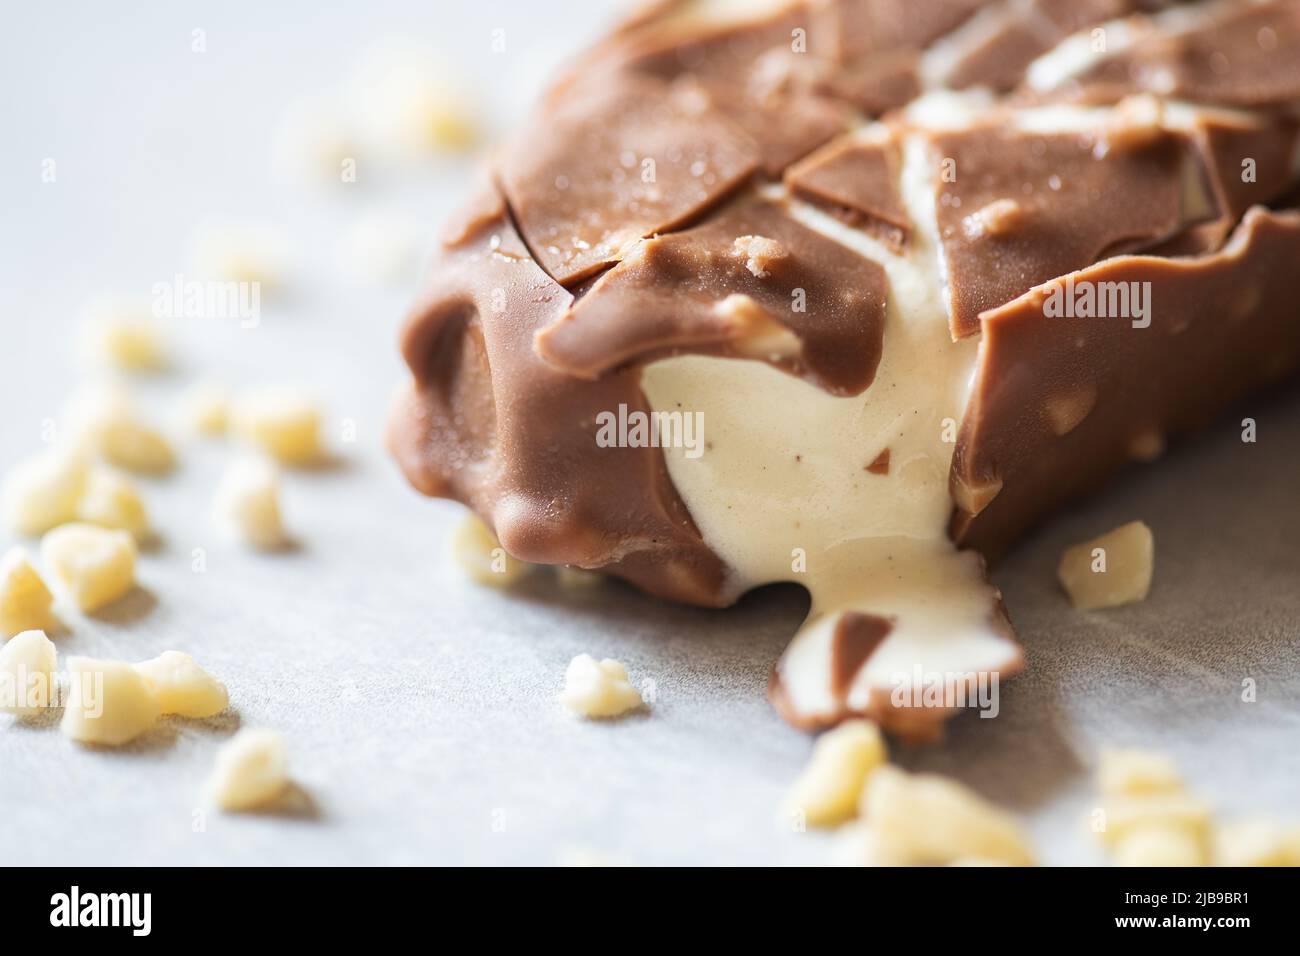 Bited almond vanilla ice-cream with chocolate glaze. Stock Photo